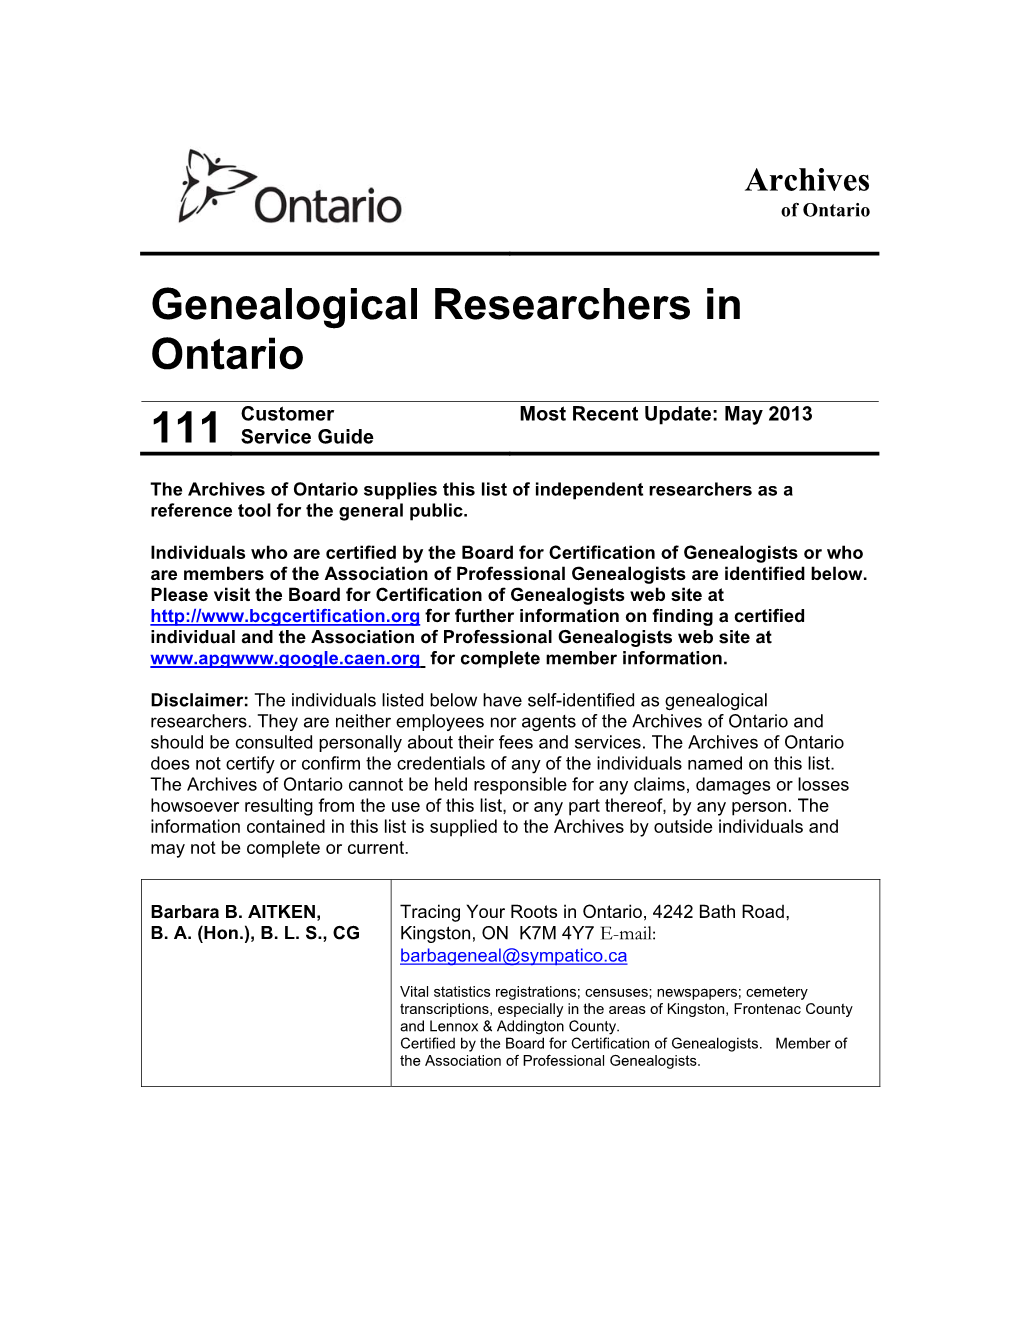 Genealogical Researchers in Ontario